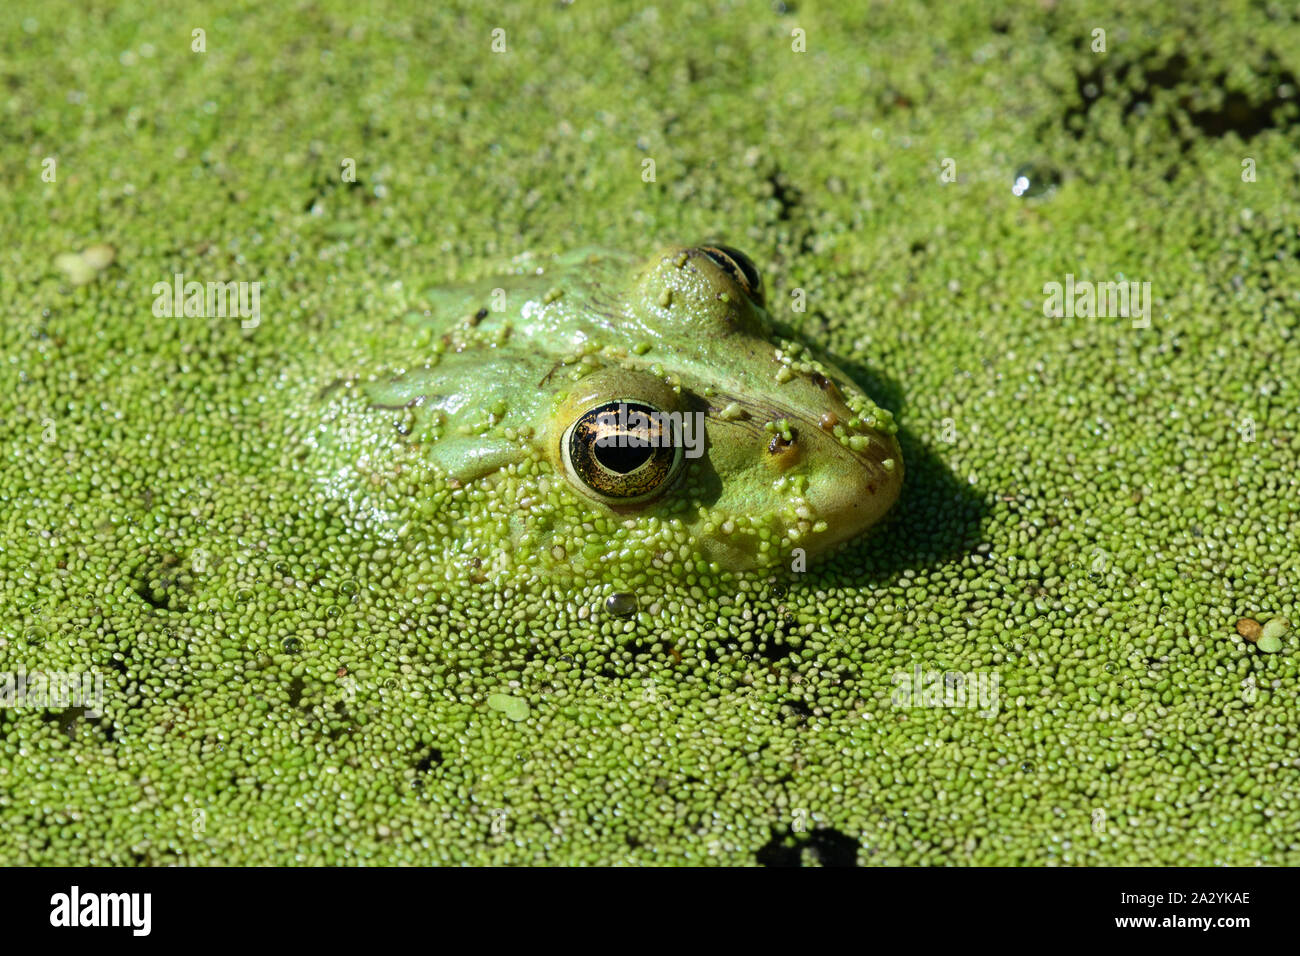 Pool Frog (Pelophylax lessonae) in Duckweed (Lemna minuta) covered pond Stock Photo